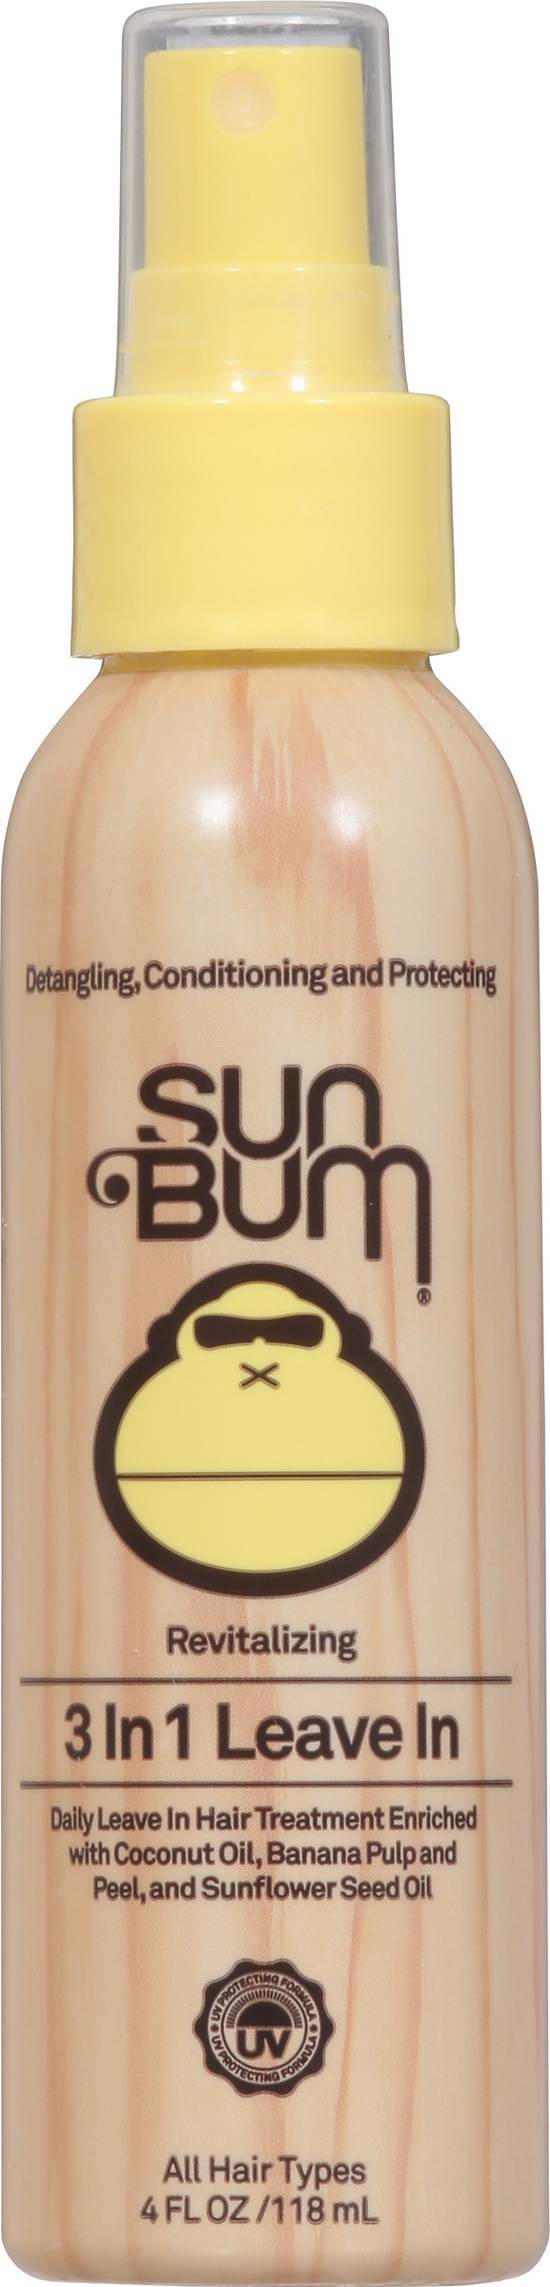 Sun Bum Revitalizing 3 in 1 Leave in Hair Conditioner Spray